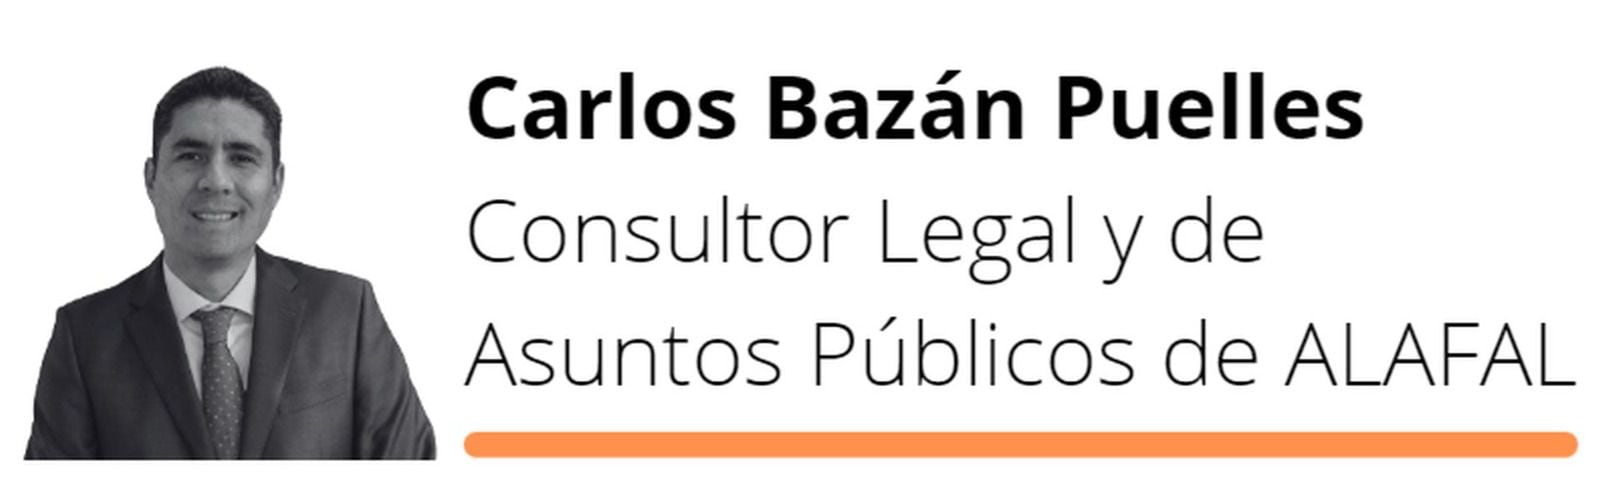 Carlos Bazán